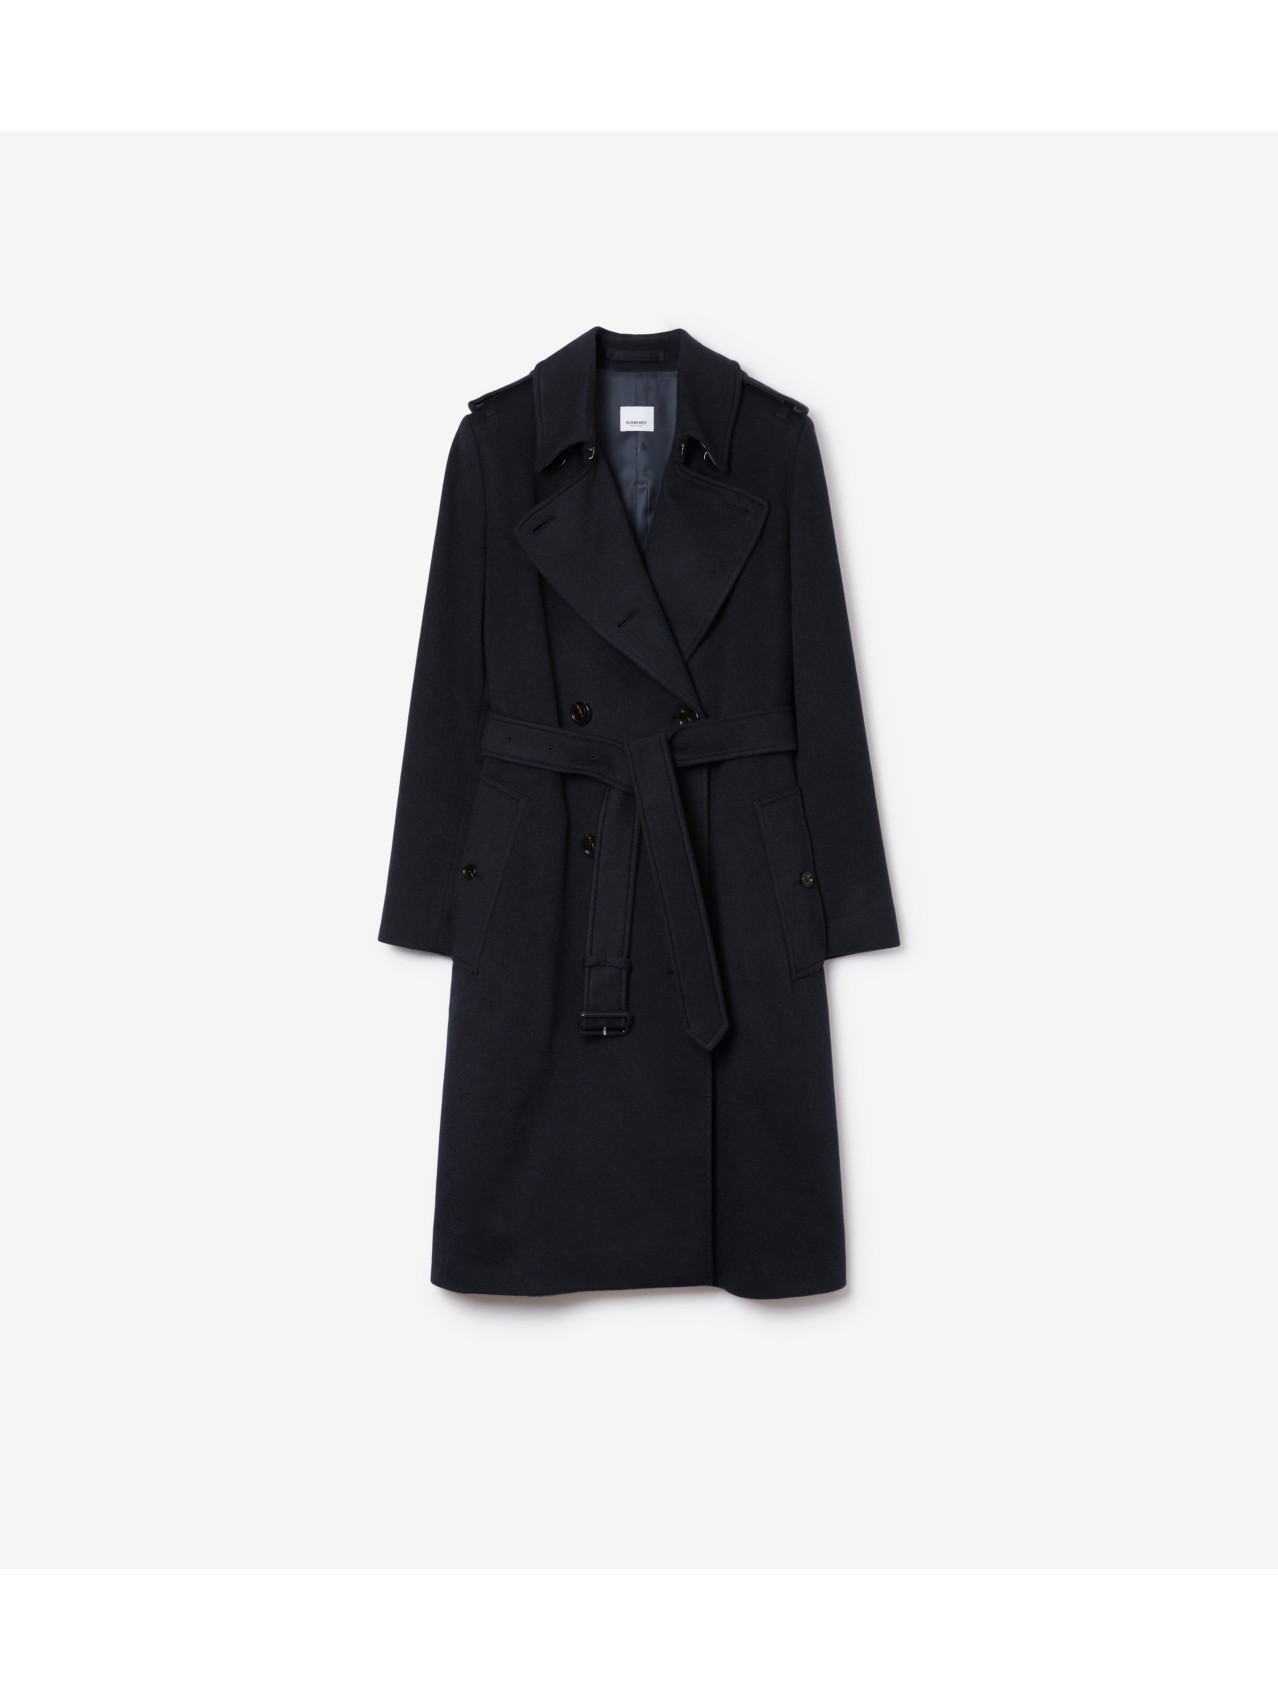 Cashmere Kensington Trench Coat in Dark Charcoal - Women |